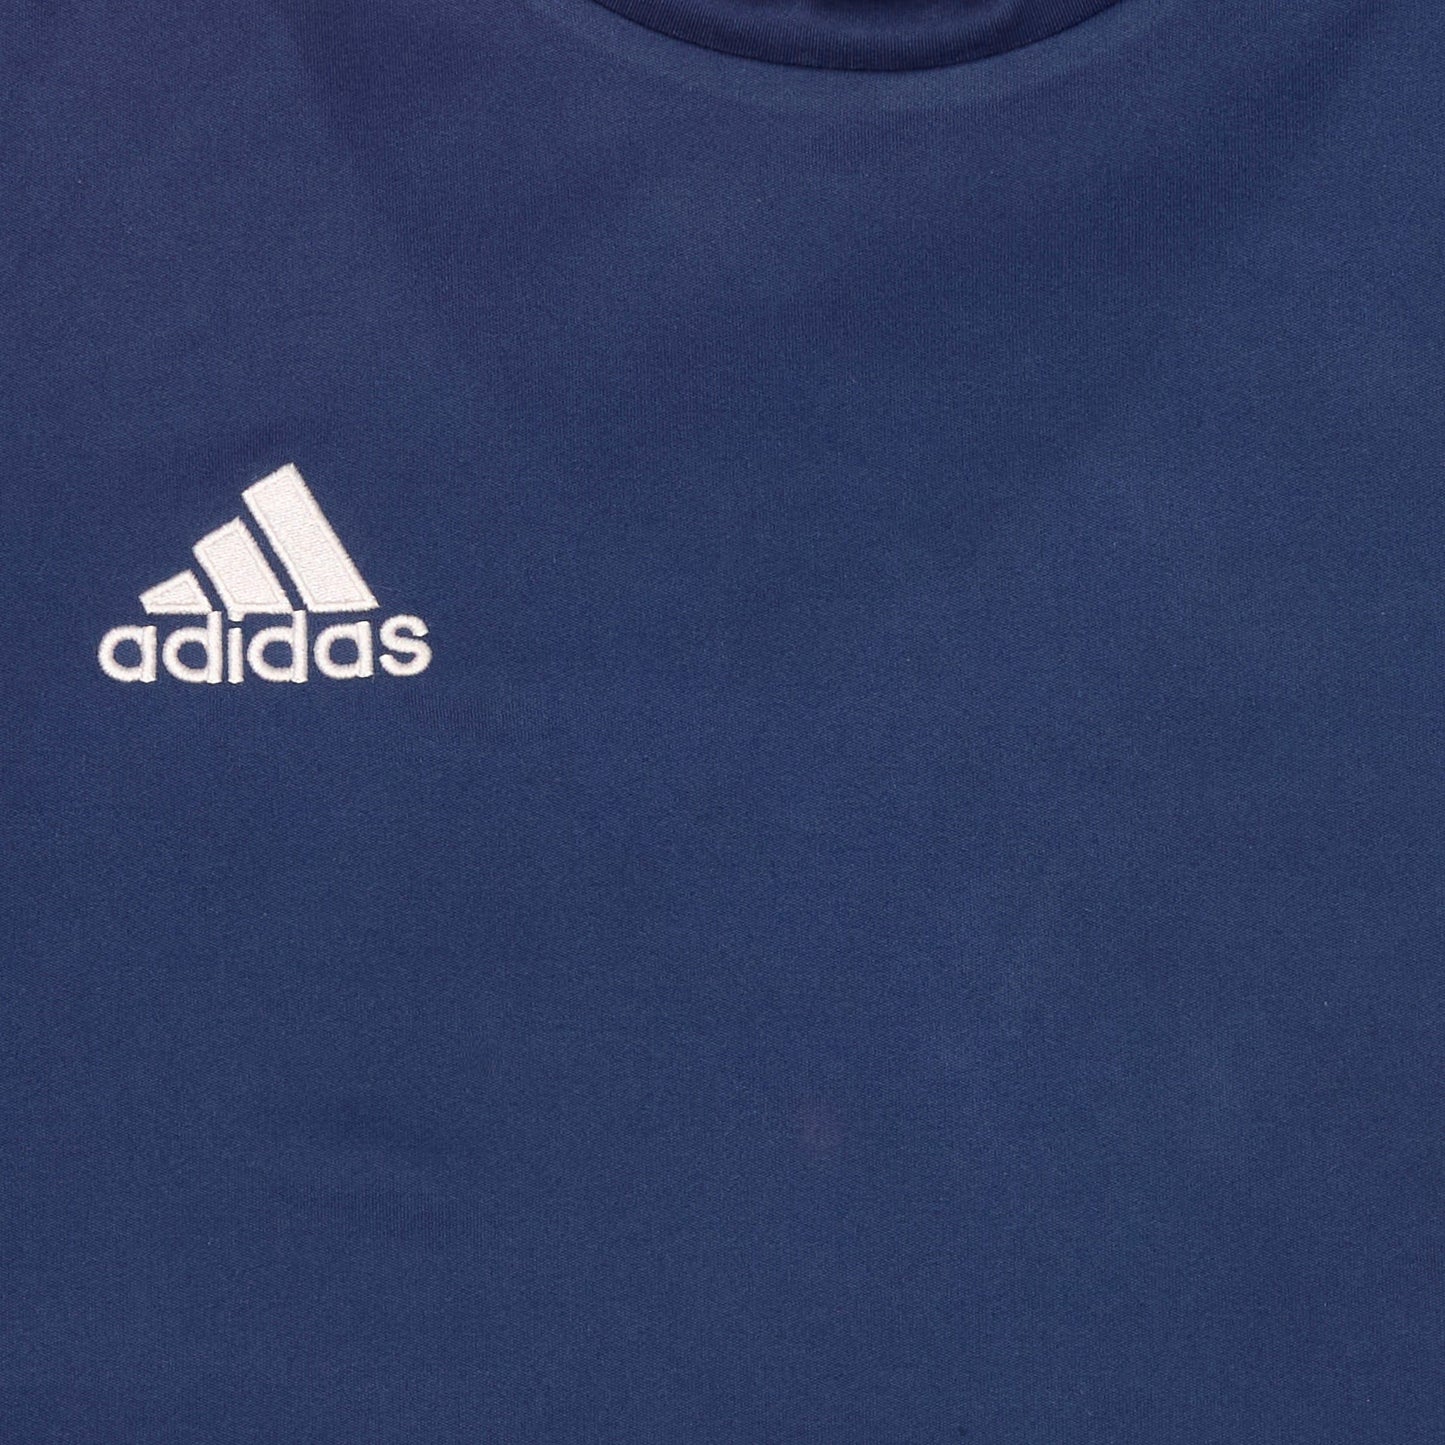 Camiseta deportiva con logo bordado de Adidas - M